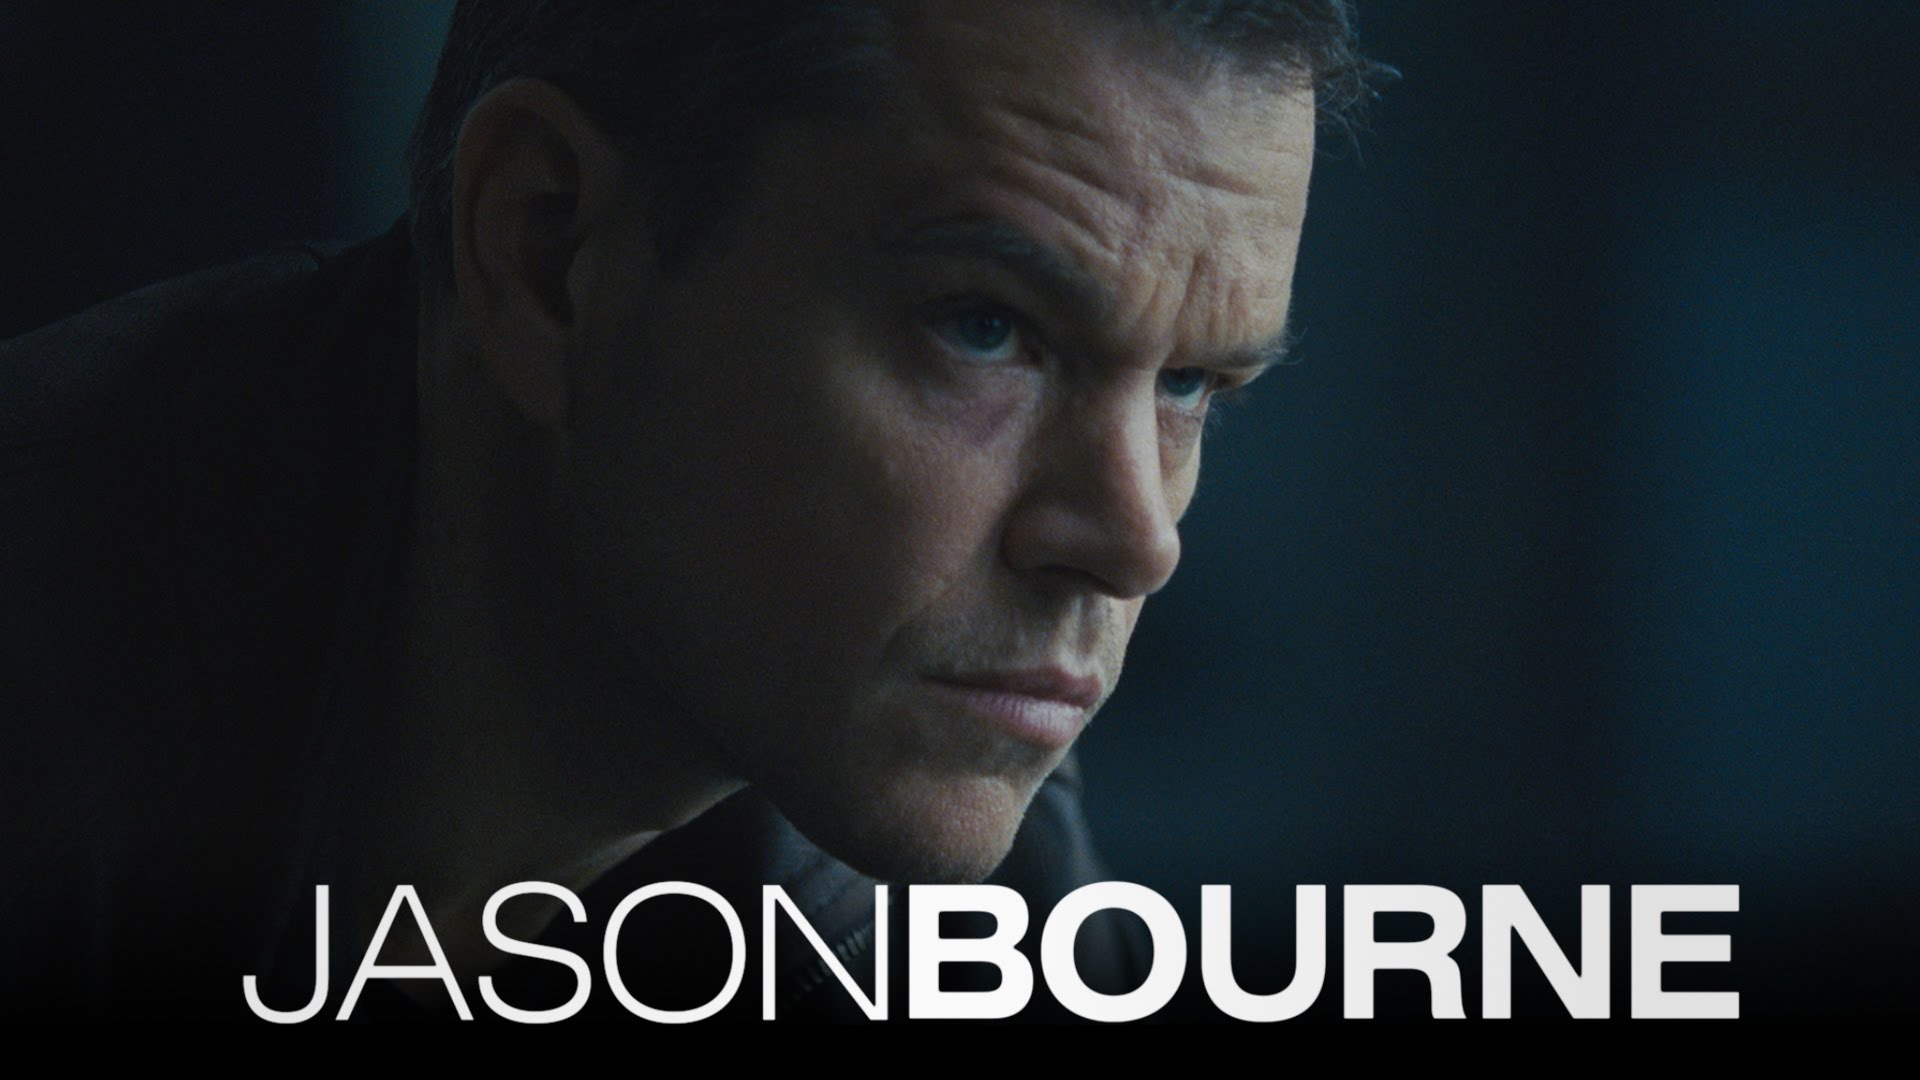 Jason Bourne Movie Wiki Story, Trailer, Cast, Wallpapers